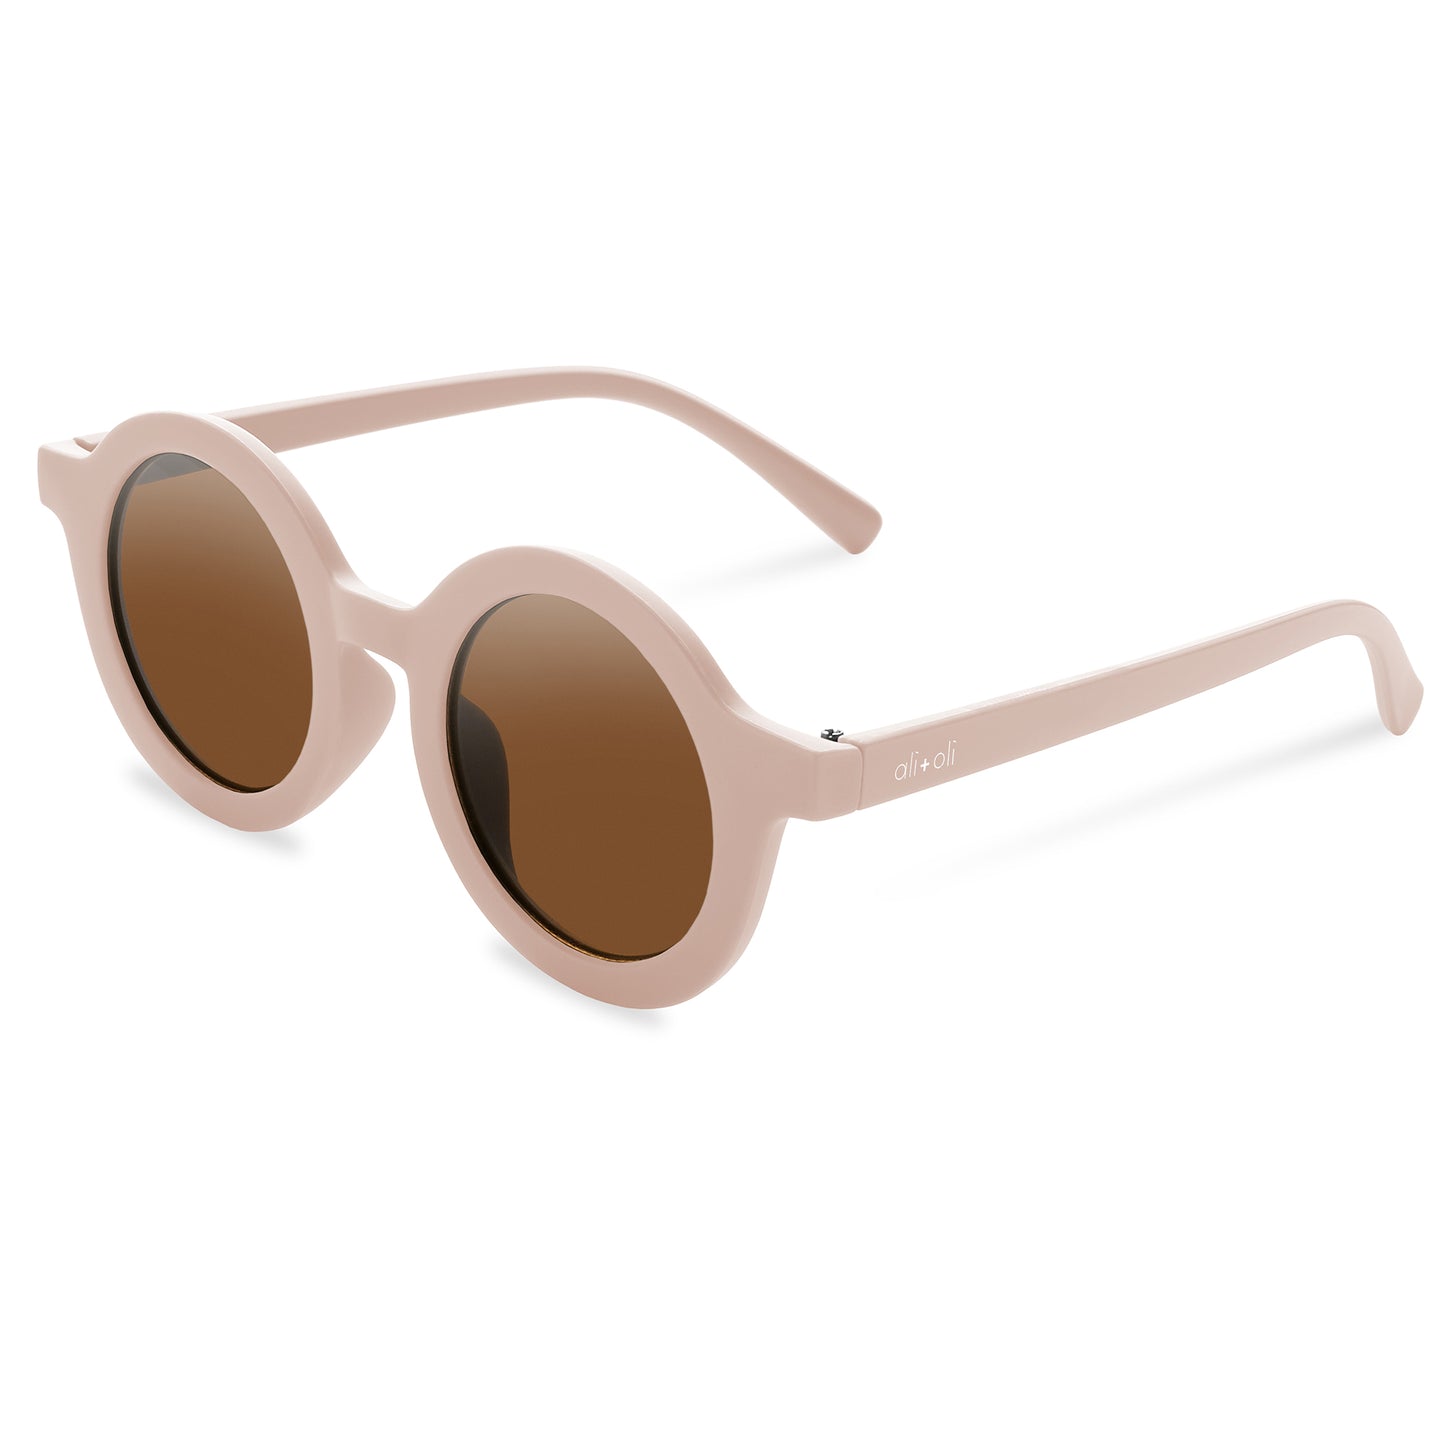 Ali+Oli Sunglasses for Kids (Pink Cream)